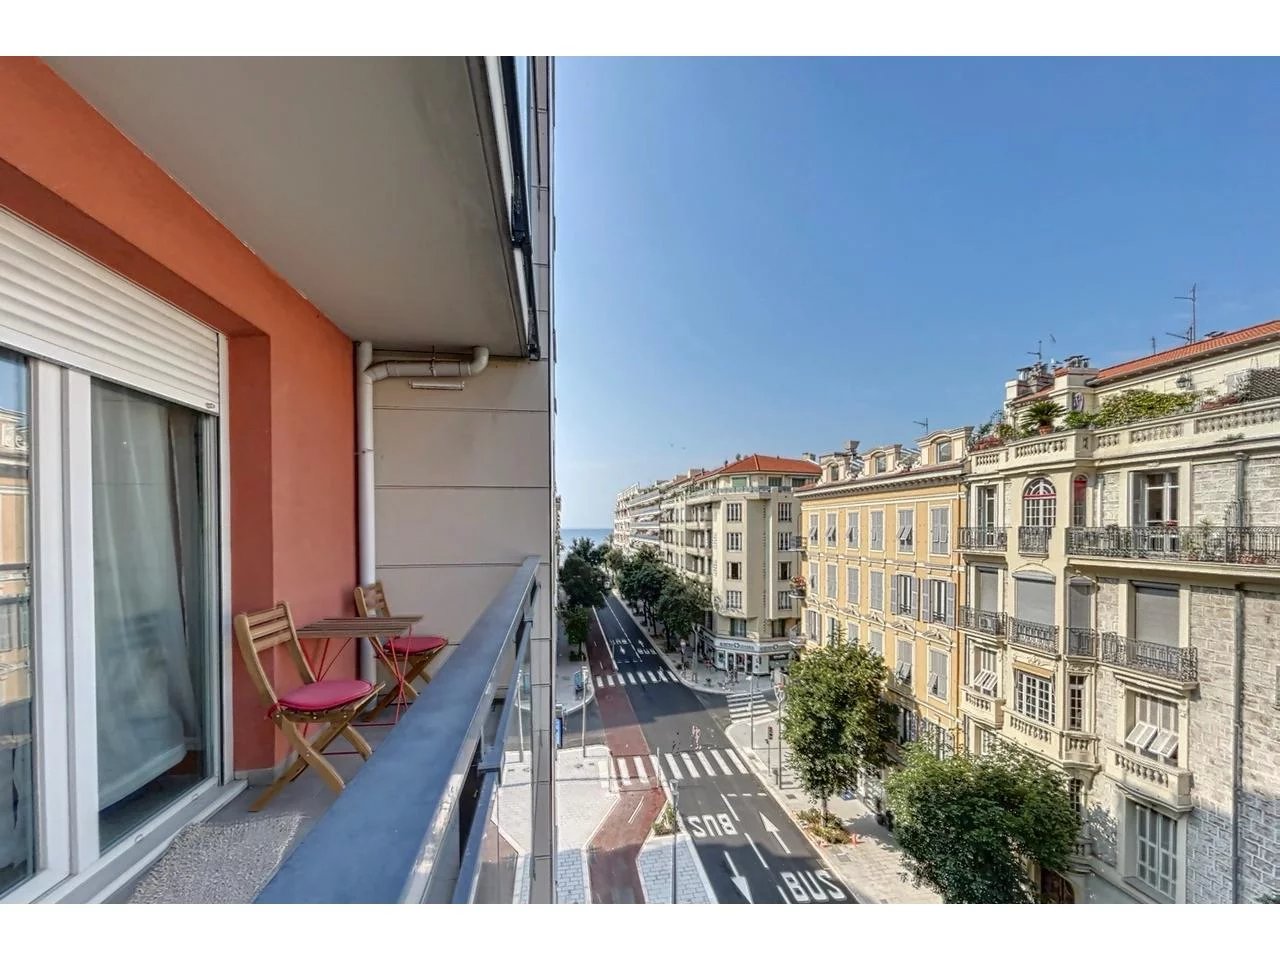 Appartement  2 Locali 51.62m2  In vendita   445 000 €